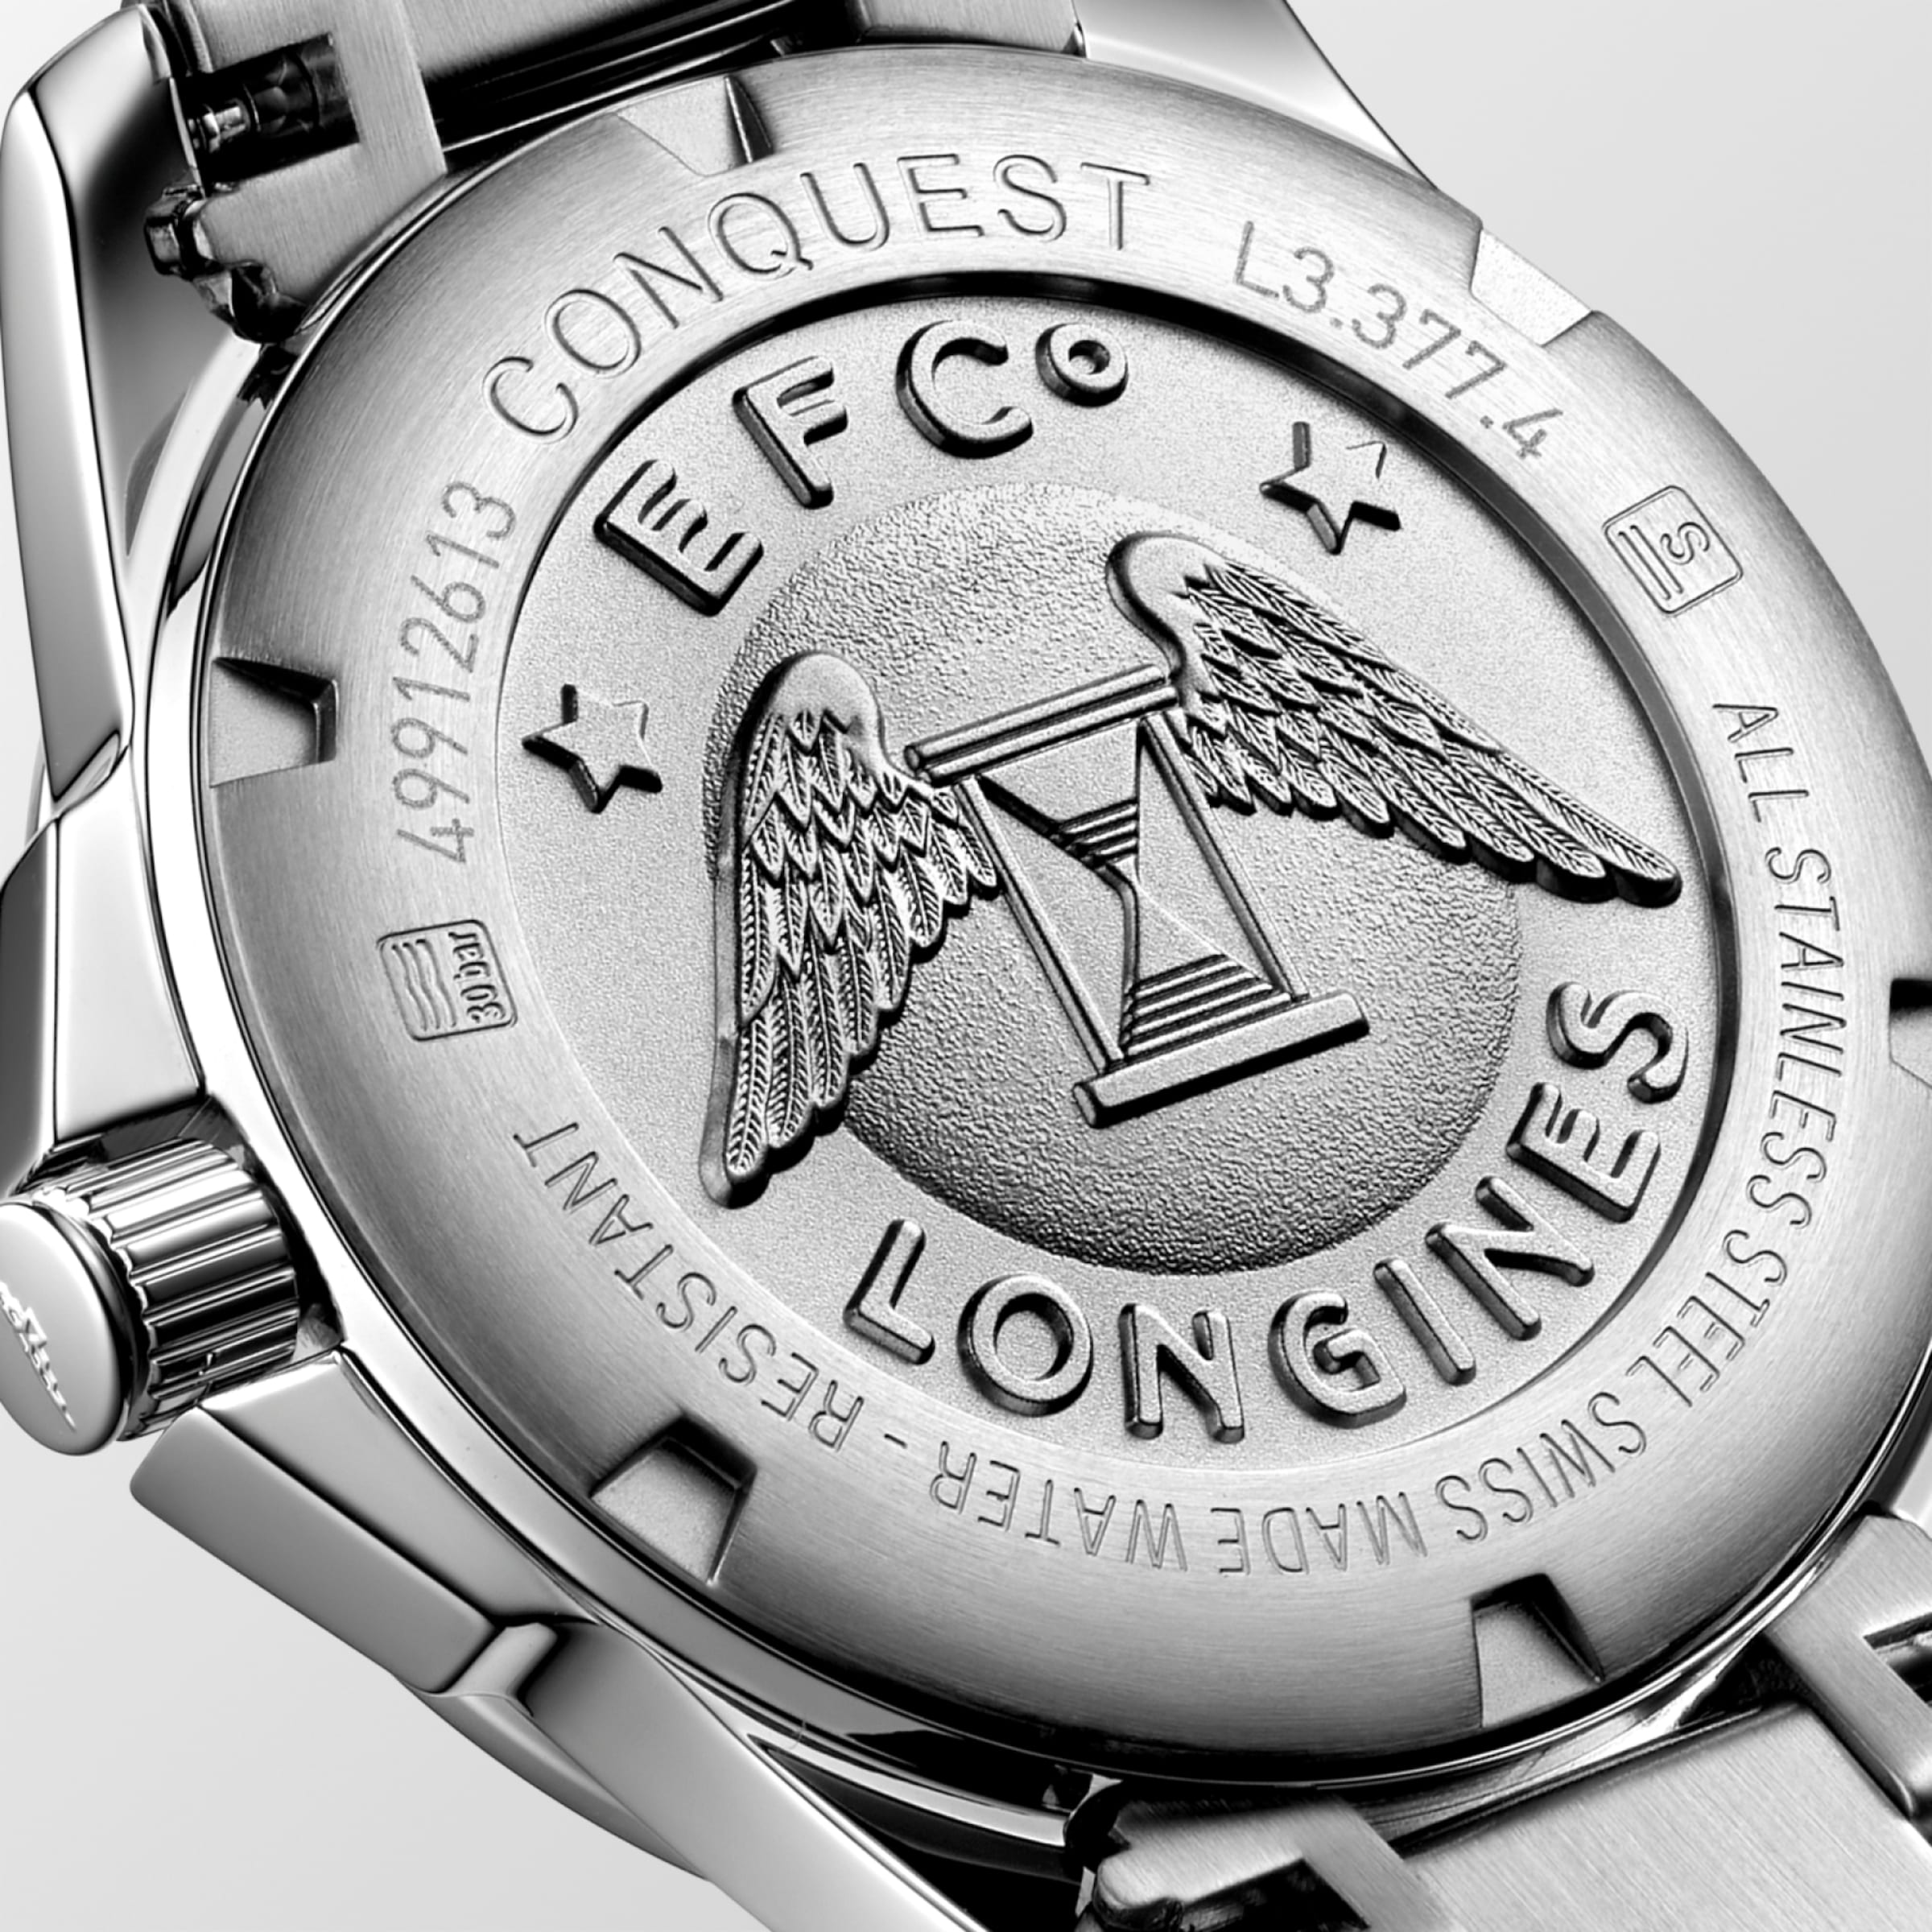 Longines CONQUEST Quartz Stainless steel Watch - L3.377.4.57.6